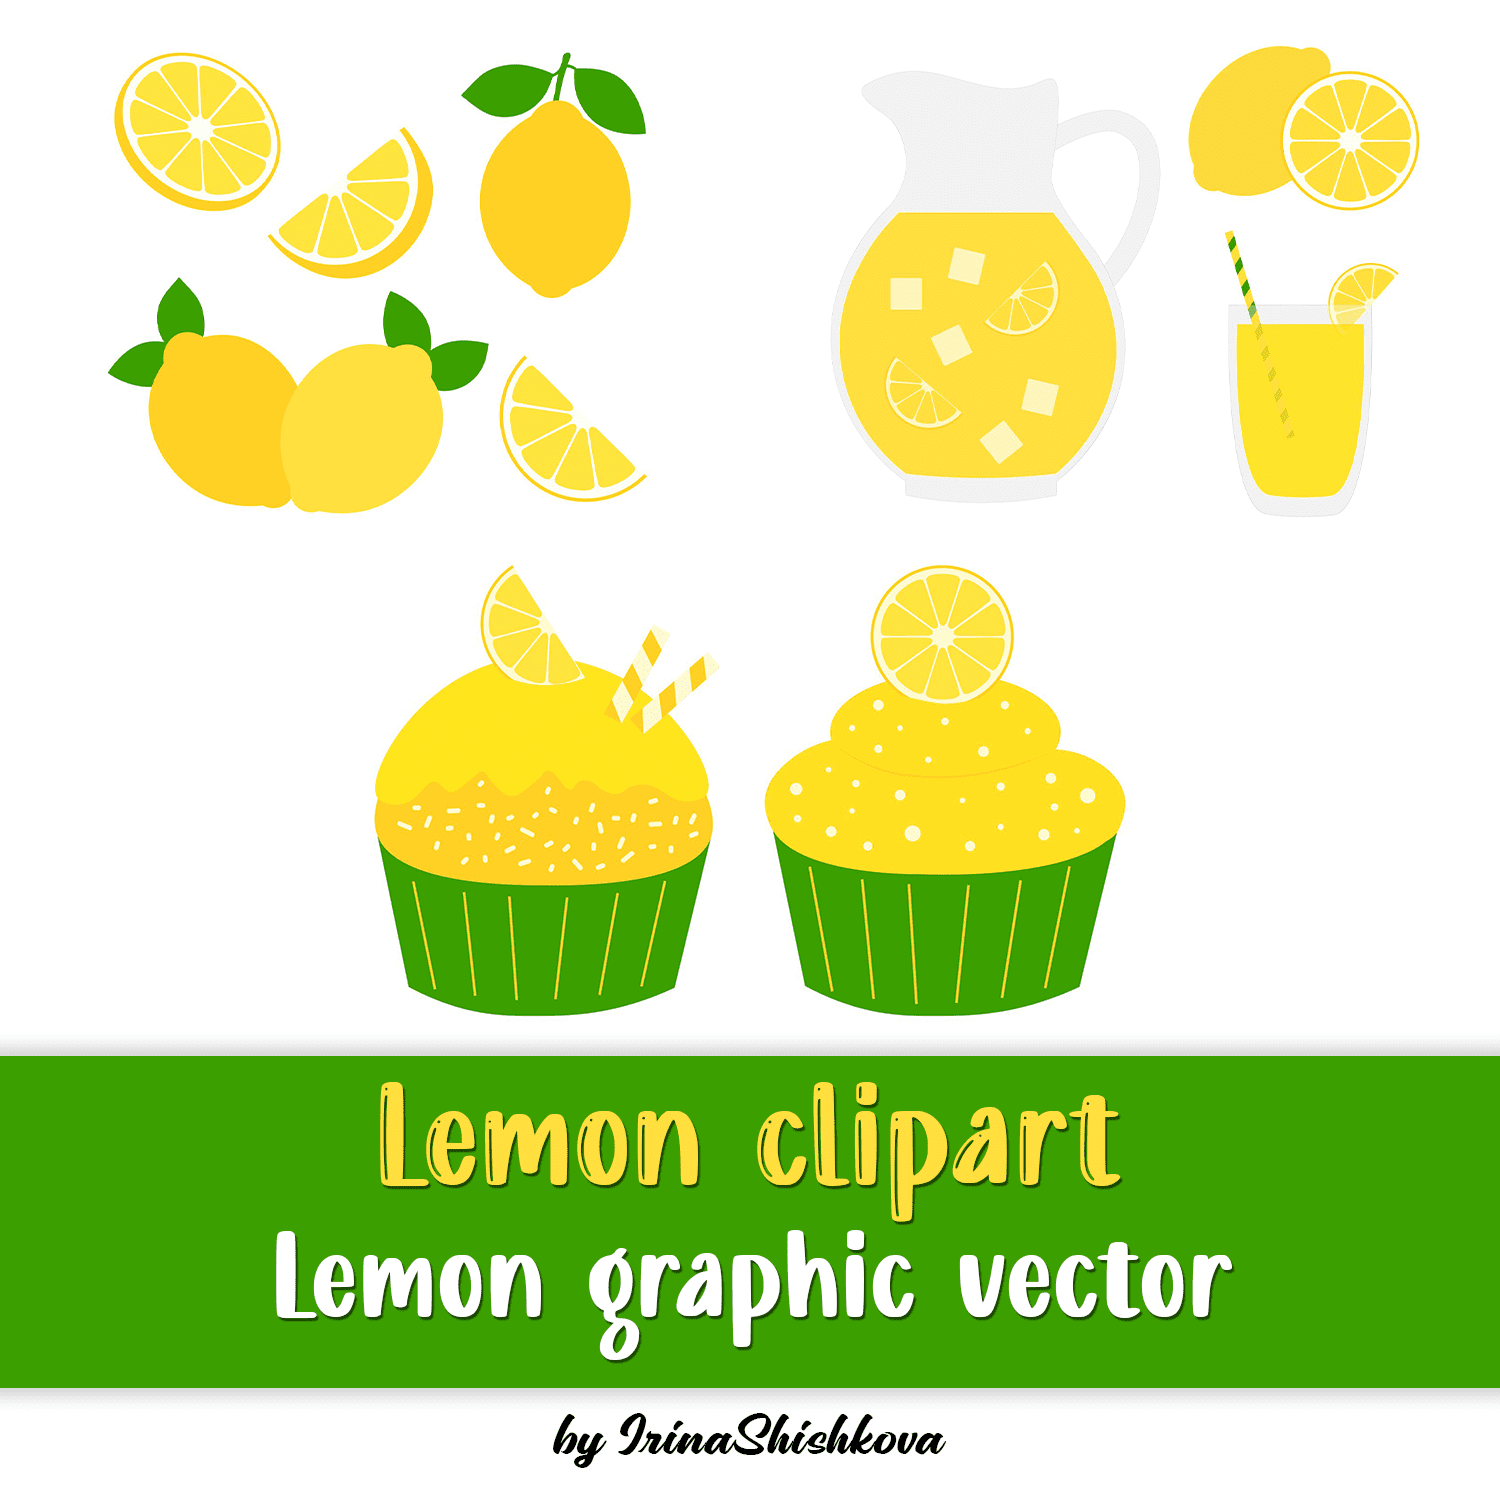 Lemon clipart. Lemon graphic vector.